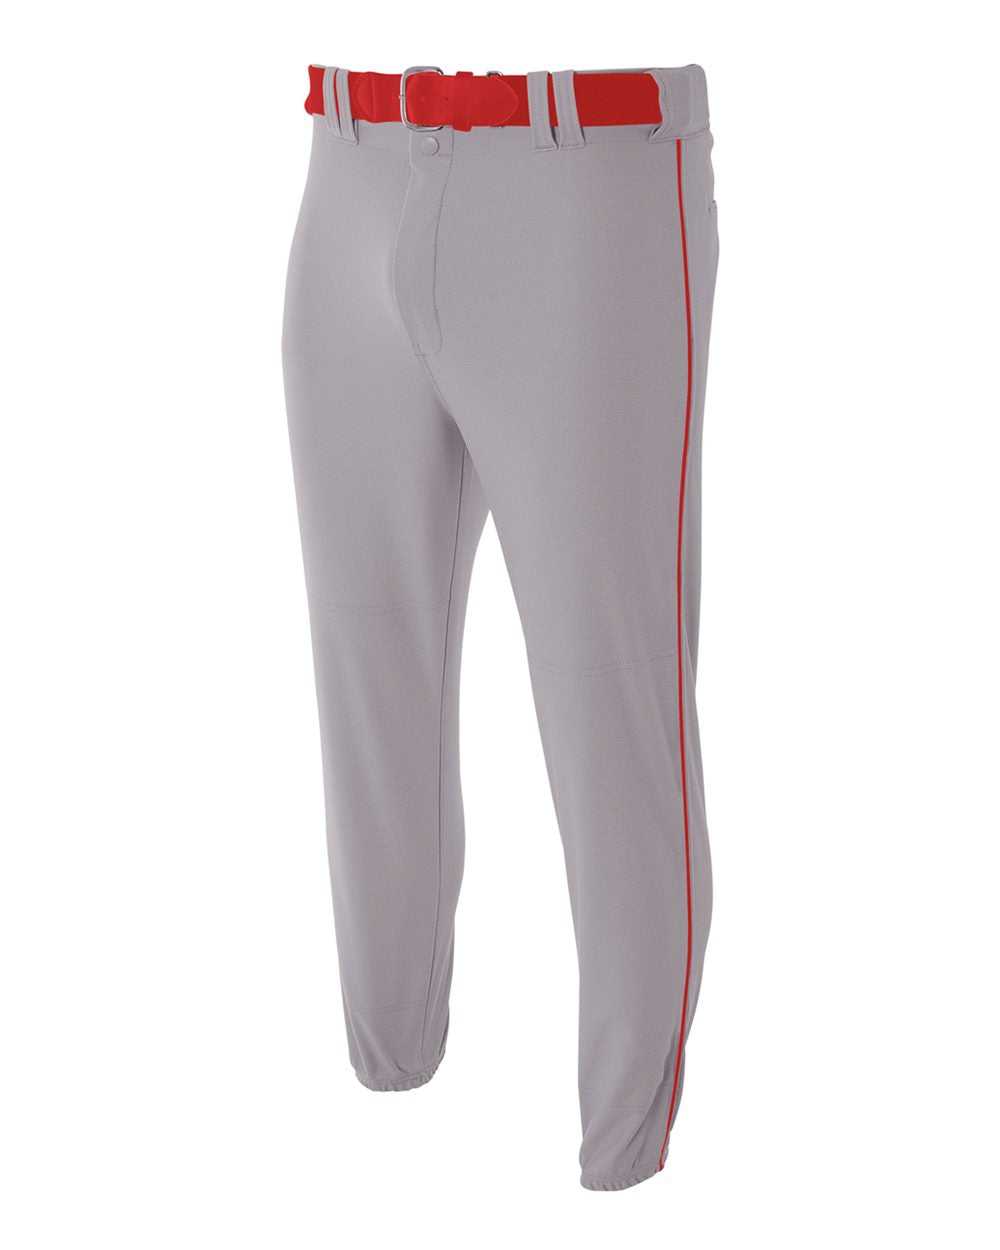 A4 N6178 Pro Style Elastic Bottom Baseball Pant - Gray Scarlet - HIT a Double